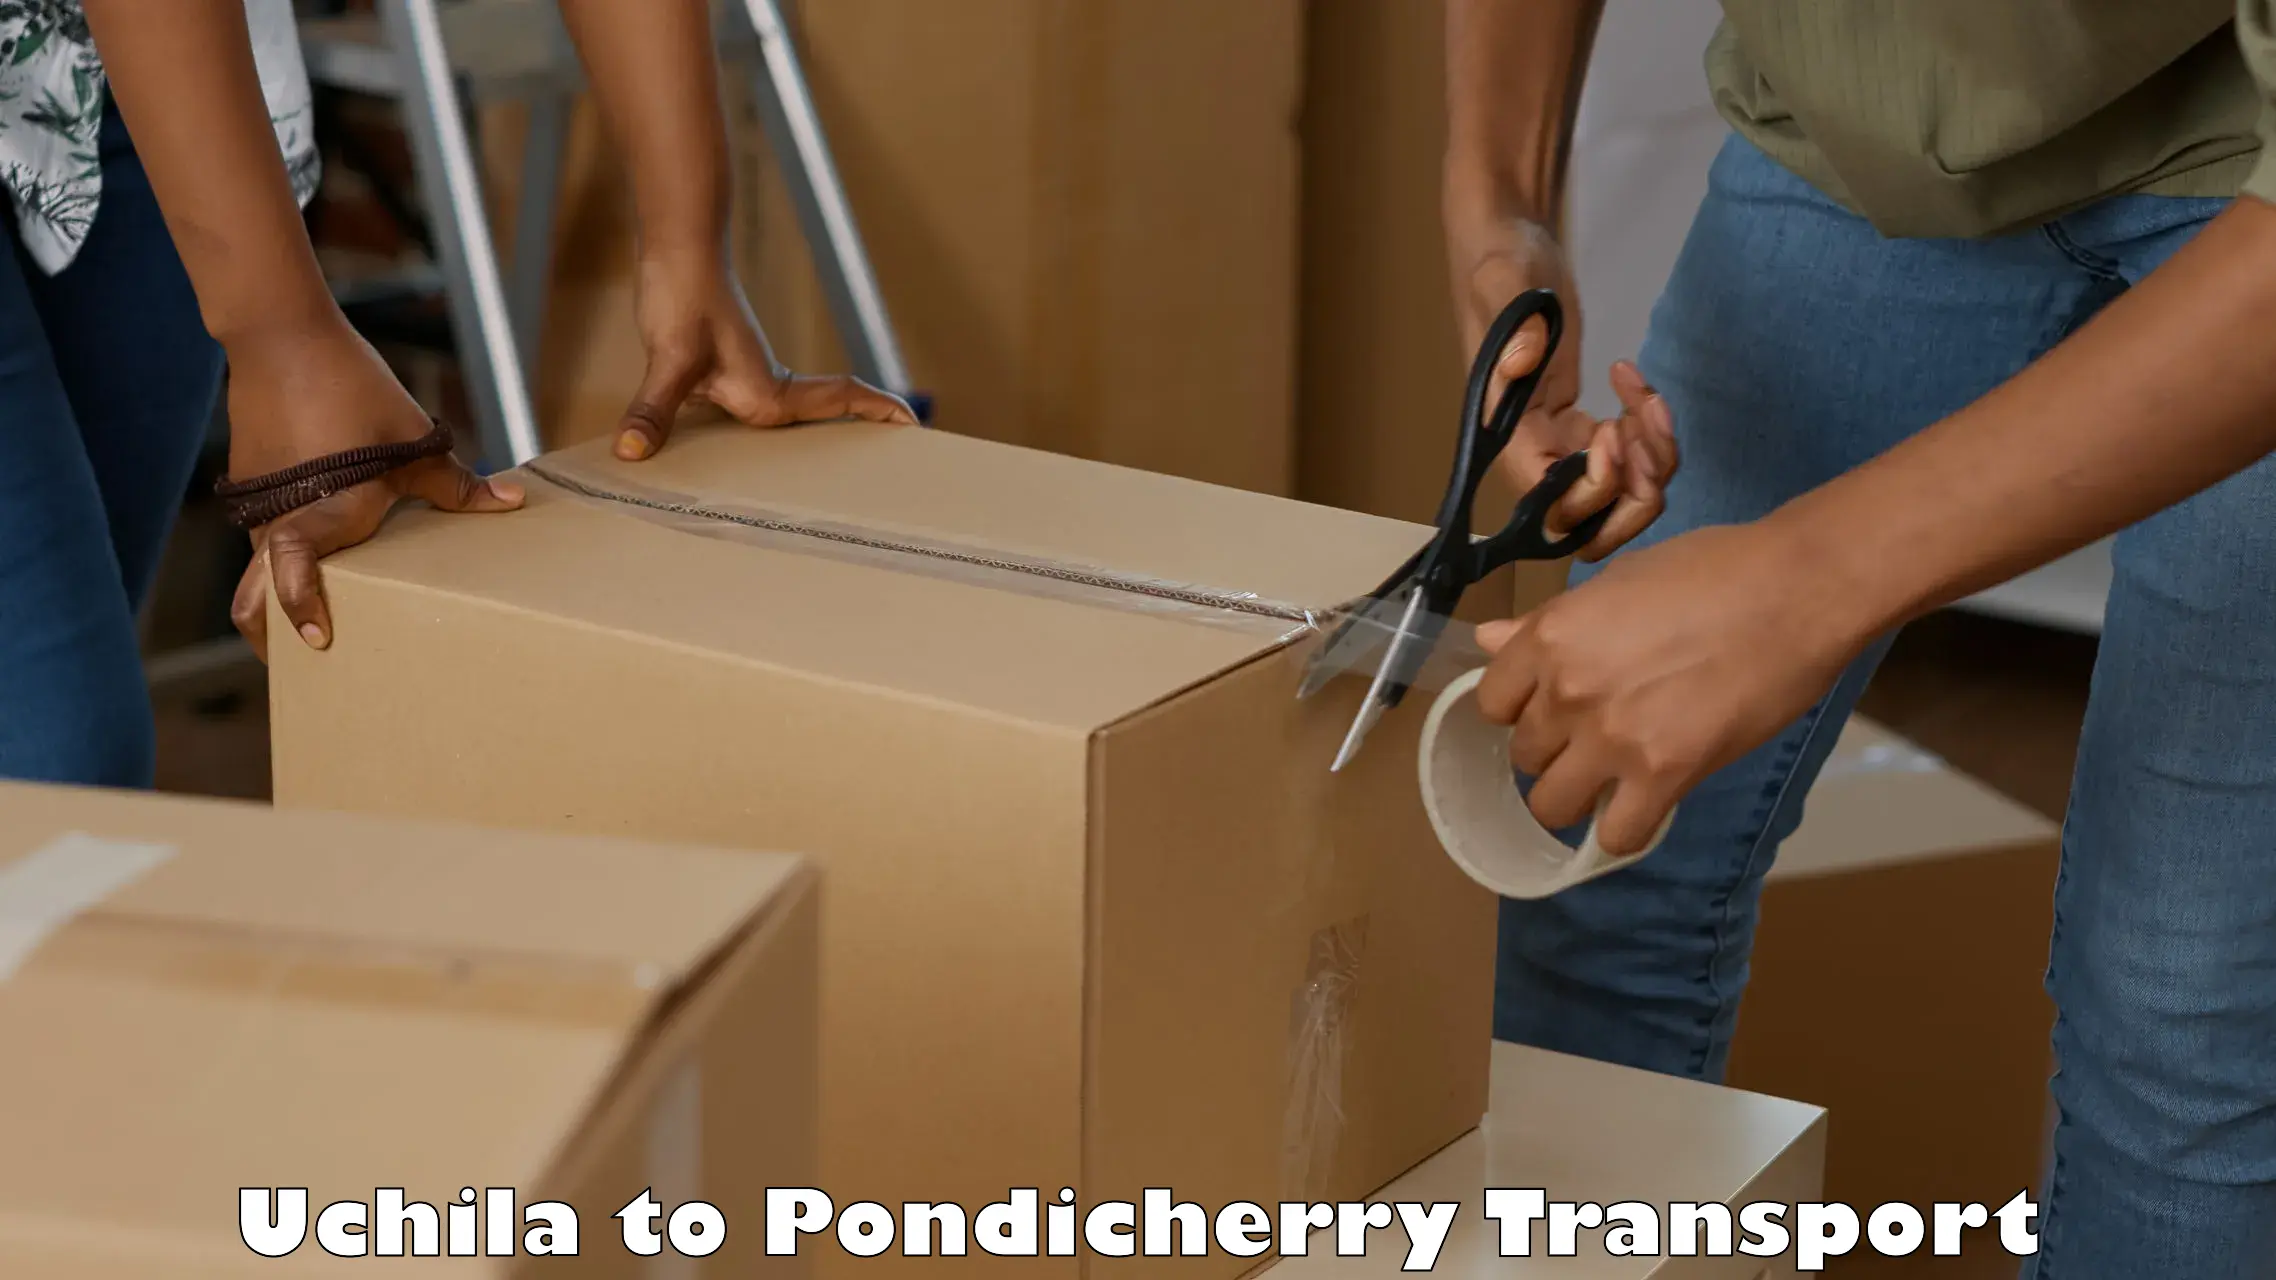 Delivery service Uchila to Pondicherry